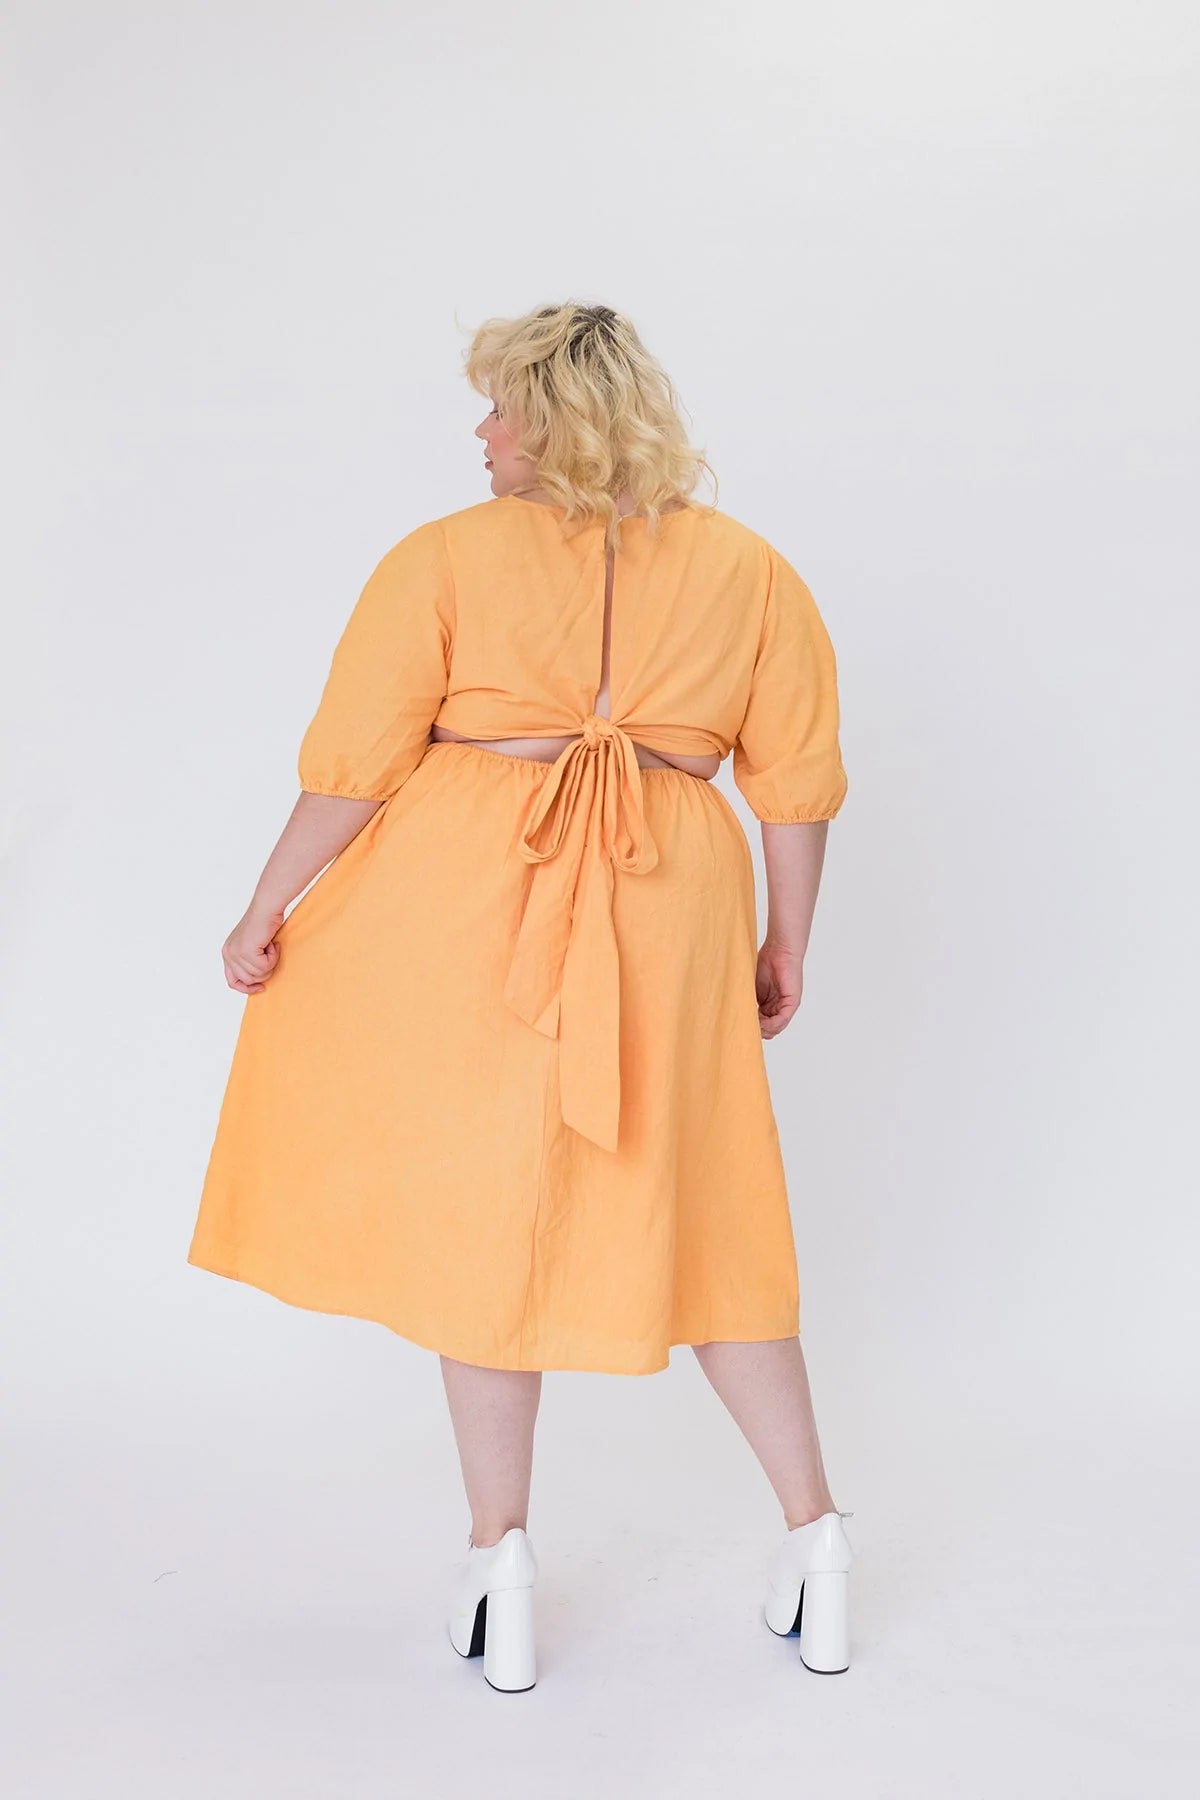 dune dress w/ open back in cantelope - 5x/6x